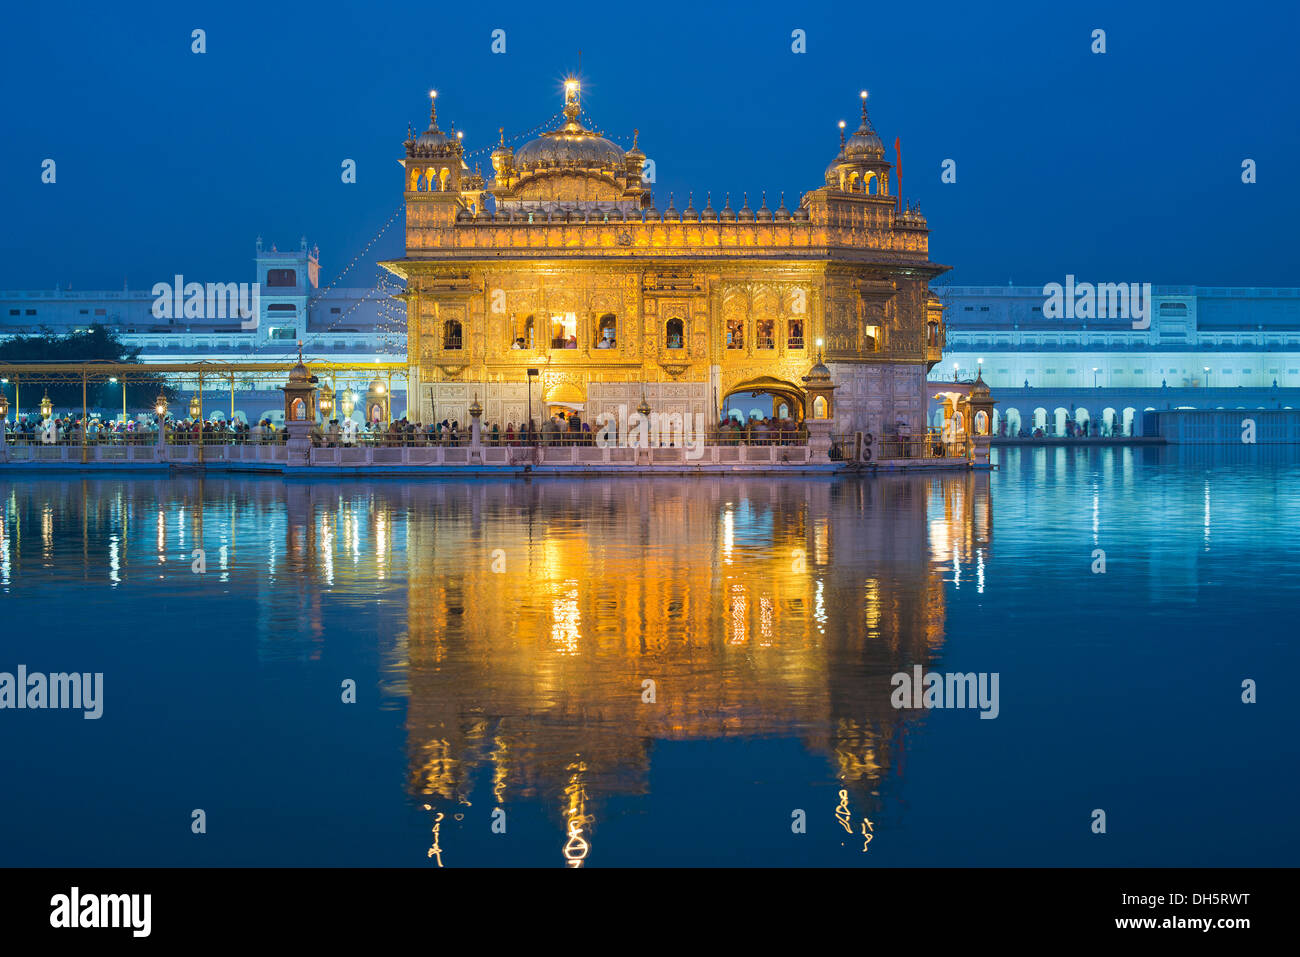 The Harmandir Sahib or Darbar Sahib, Golden Temple, the main shrine of the Sikhs, with the holy Amrit Sagar lake at dusk Stock Photo